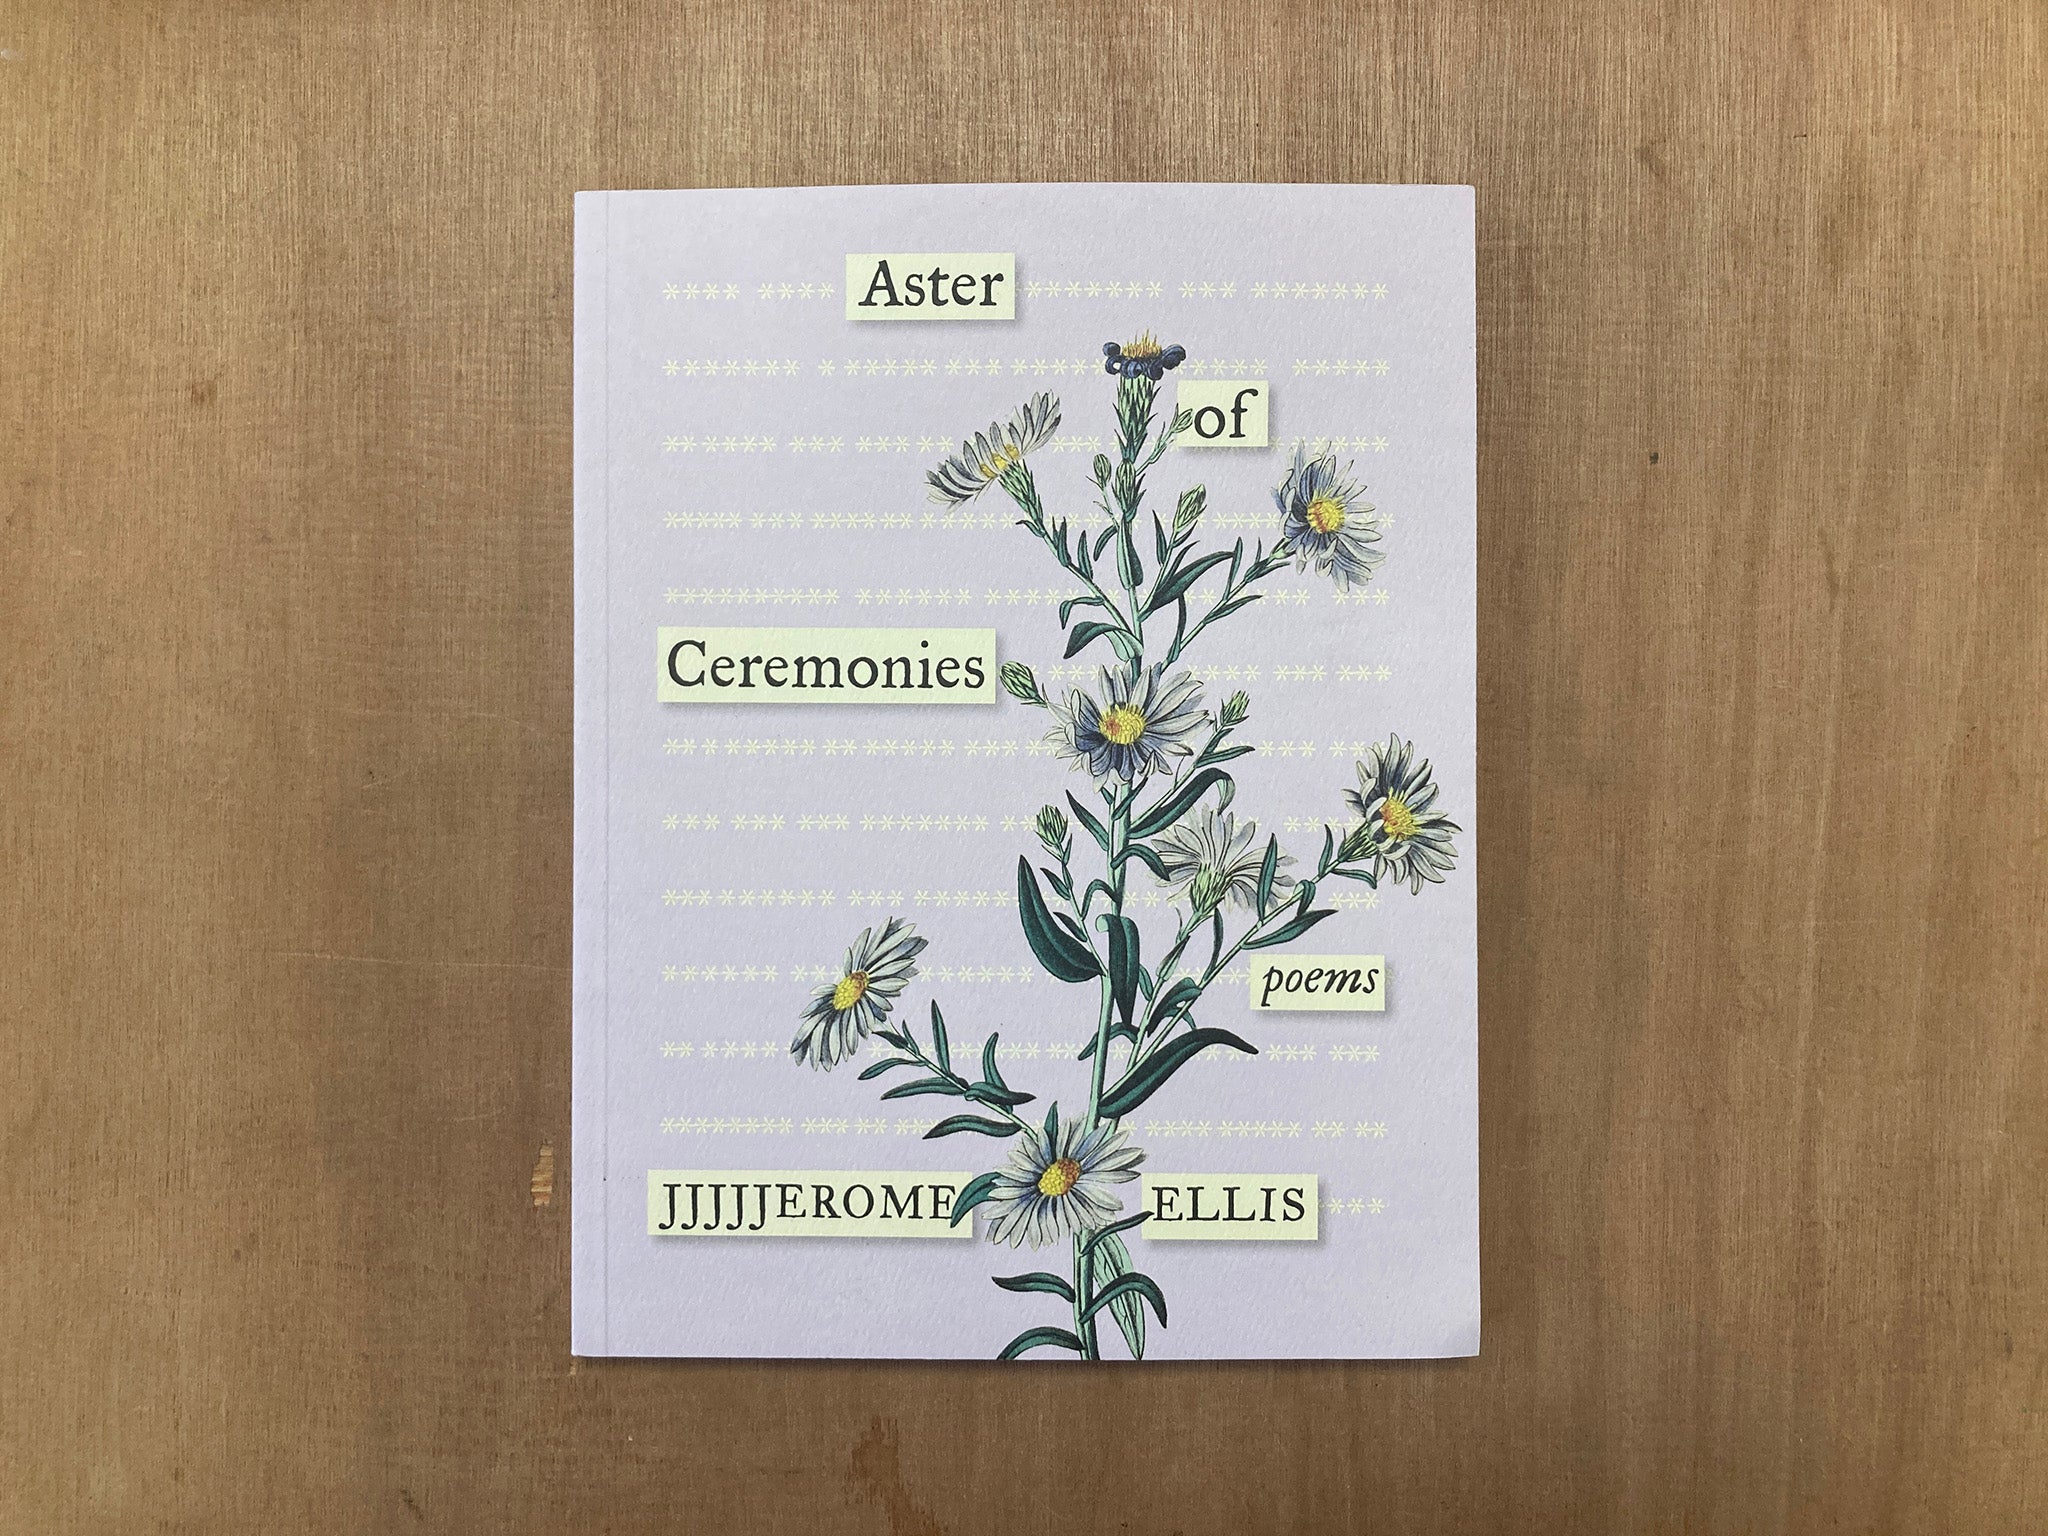 ASTER OF CEREMONIES by JJJJJerome Ellis